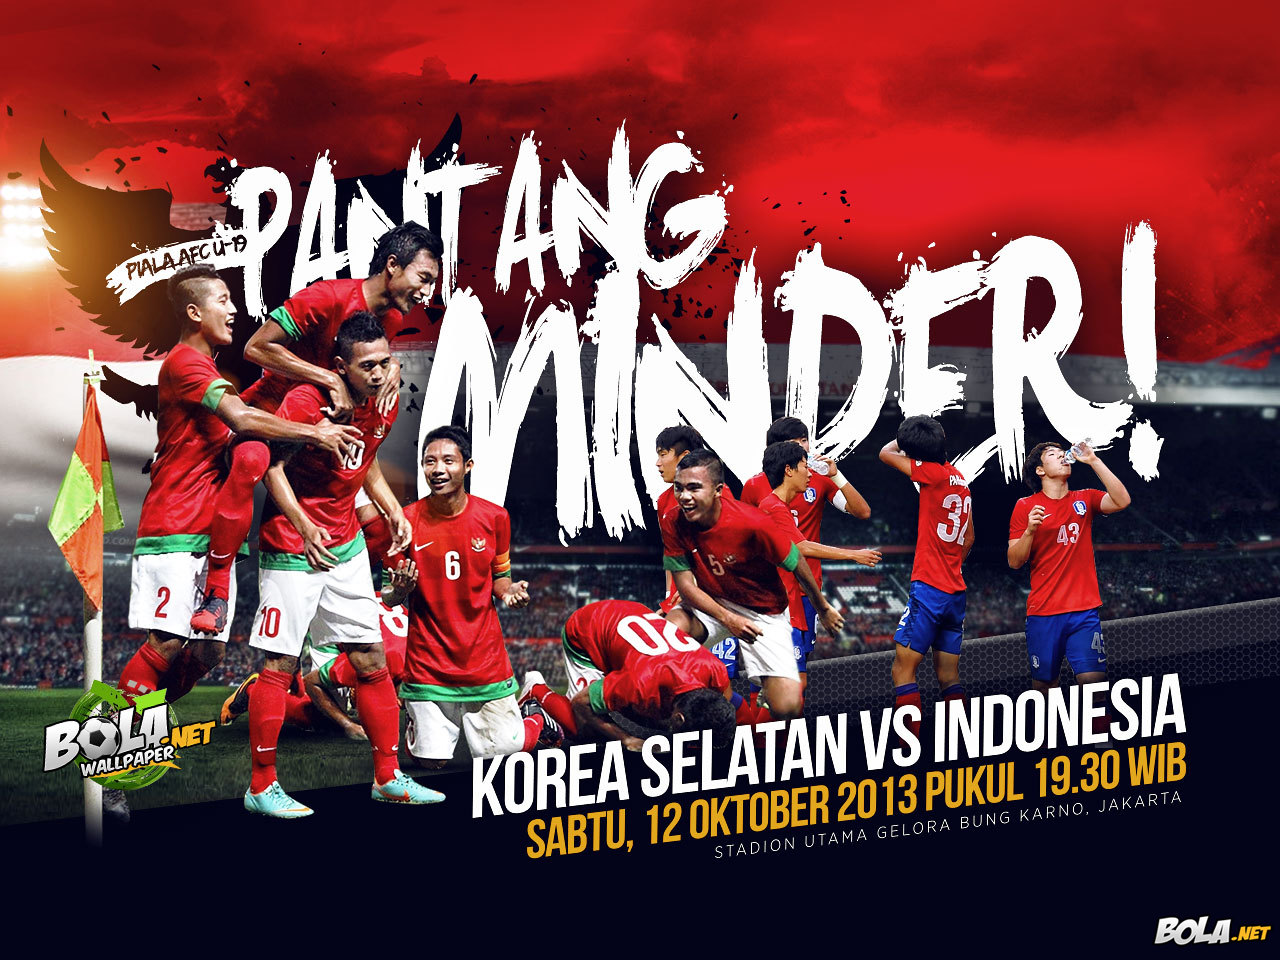 Deskripsi : Wallpaper Afc Cup U19: Korsel Vs Indonesia, size: 1280x960